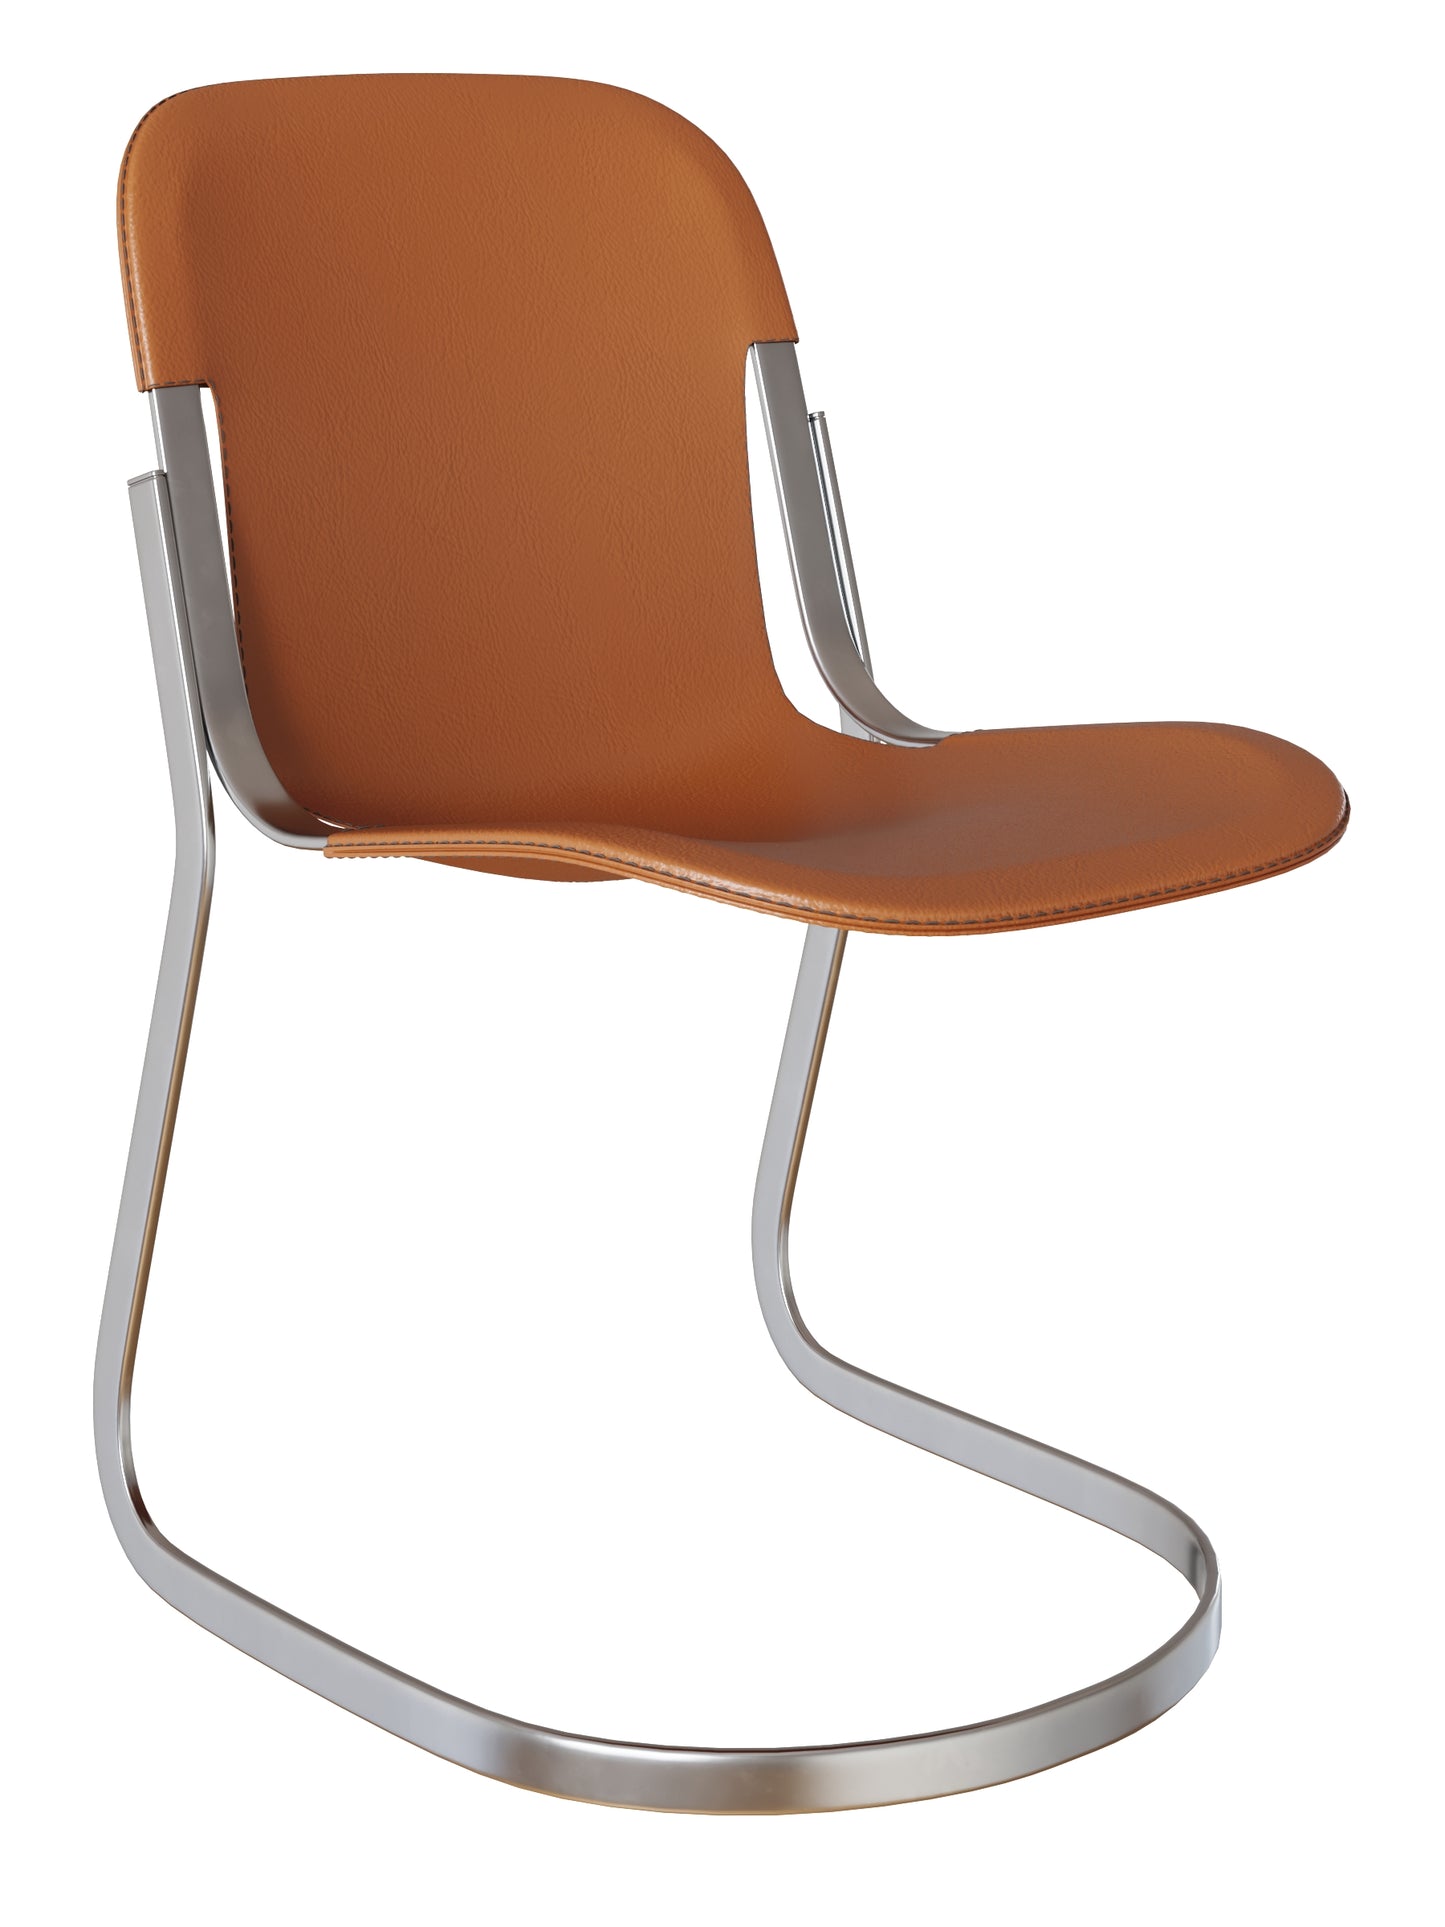 Willy-Rizzo-Chair-3DModel-by-KrievoStore